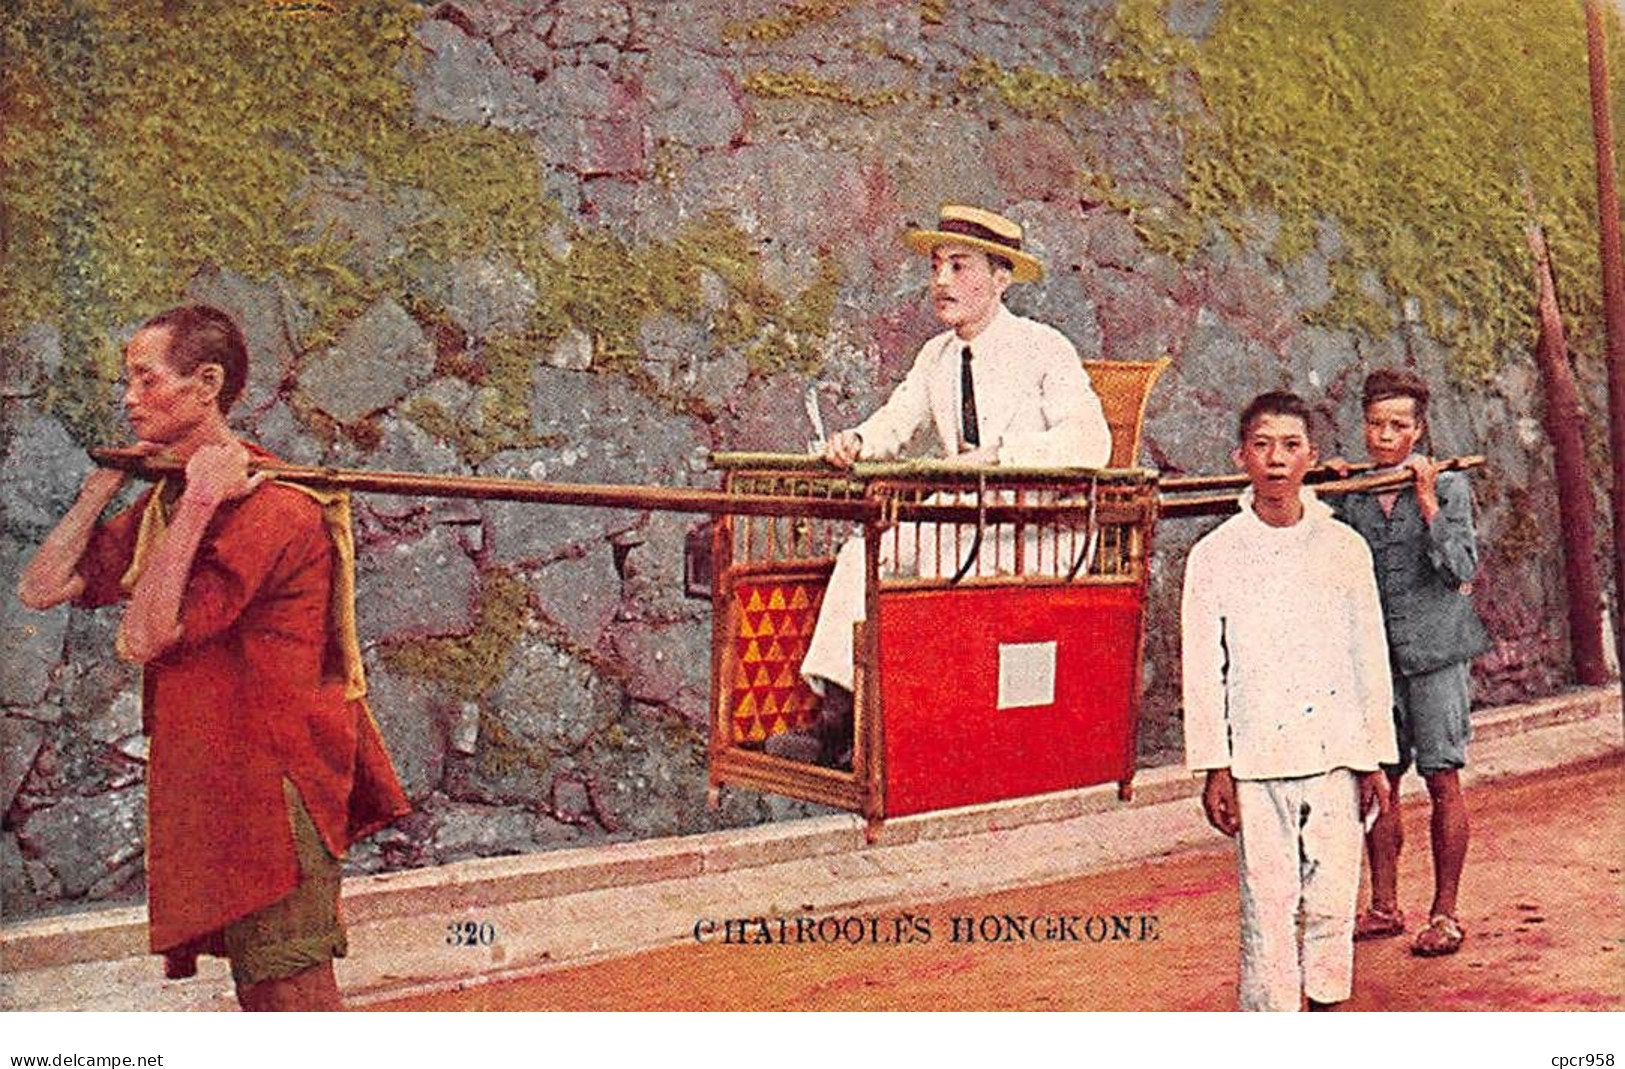 Chine - N°71866 - HONG-KONG - Chairooles - Chinois Portant Un Européen Dans Une Chaise à Porteurs - China (Hongkong)